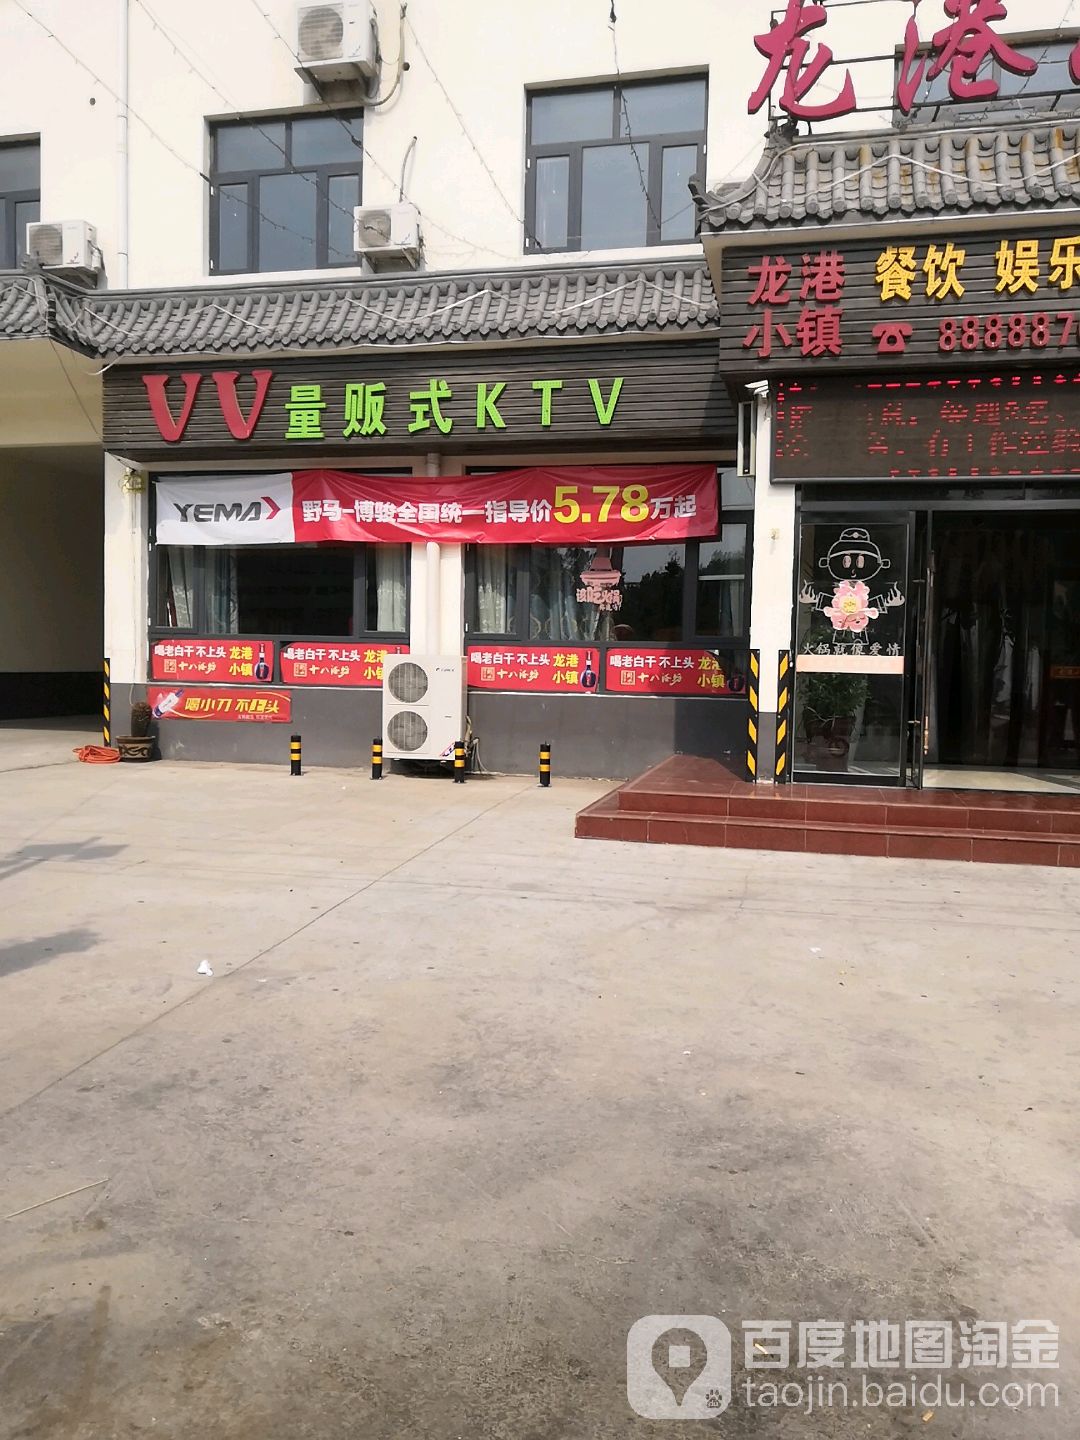 VV量贩式KTV